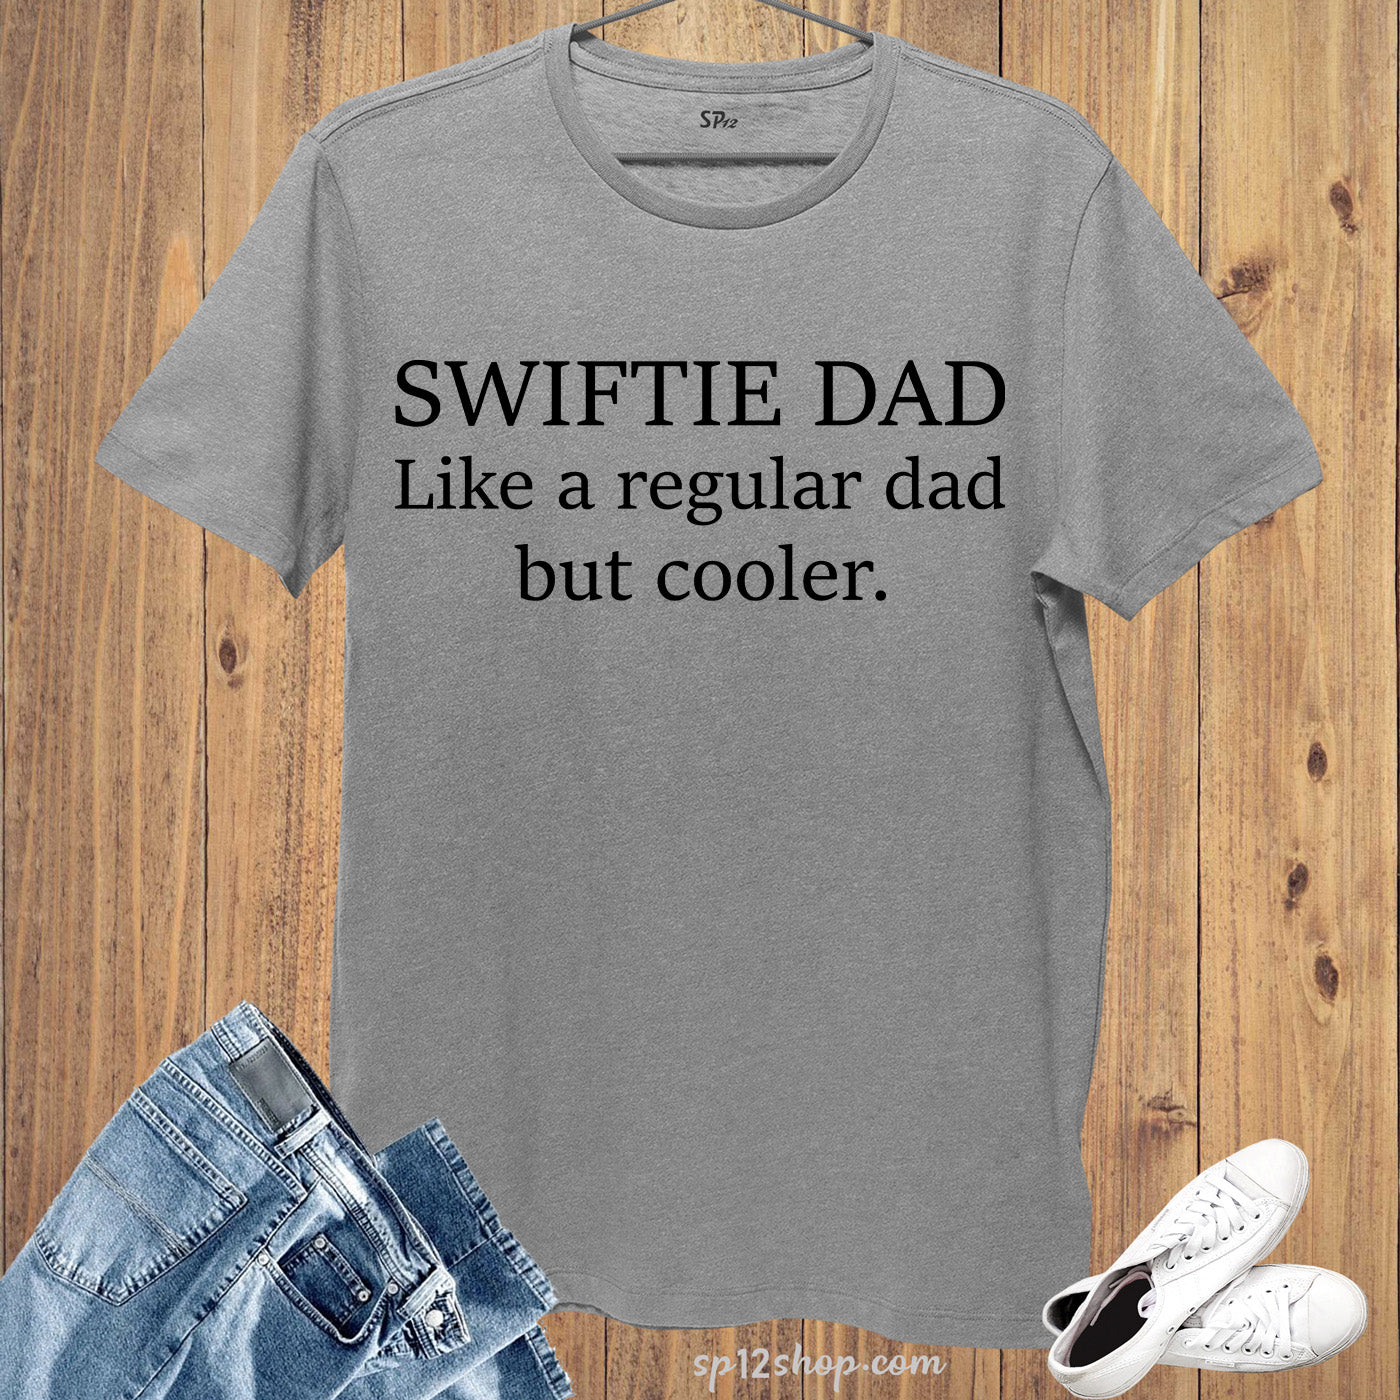 Swiftie Dad T-Shirt